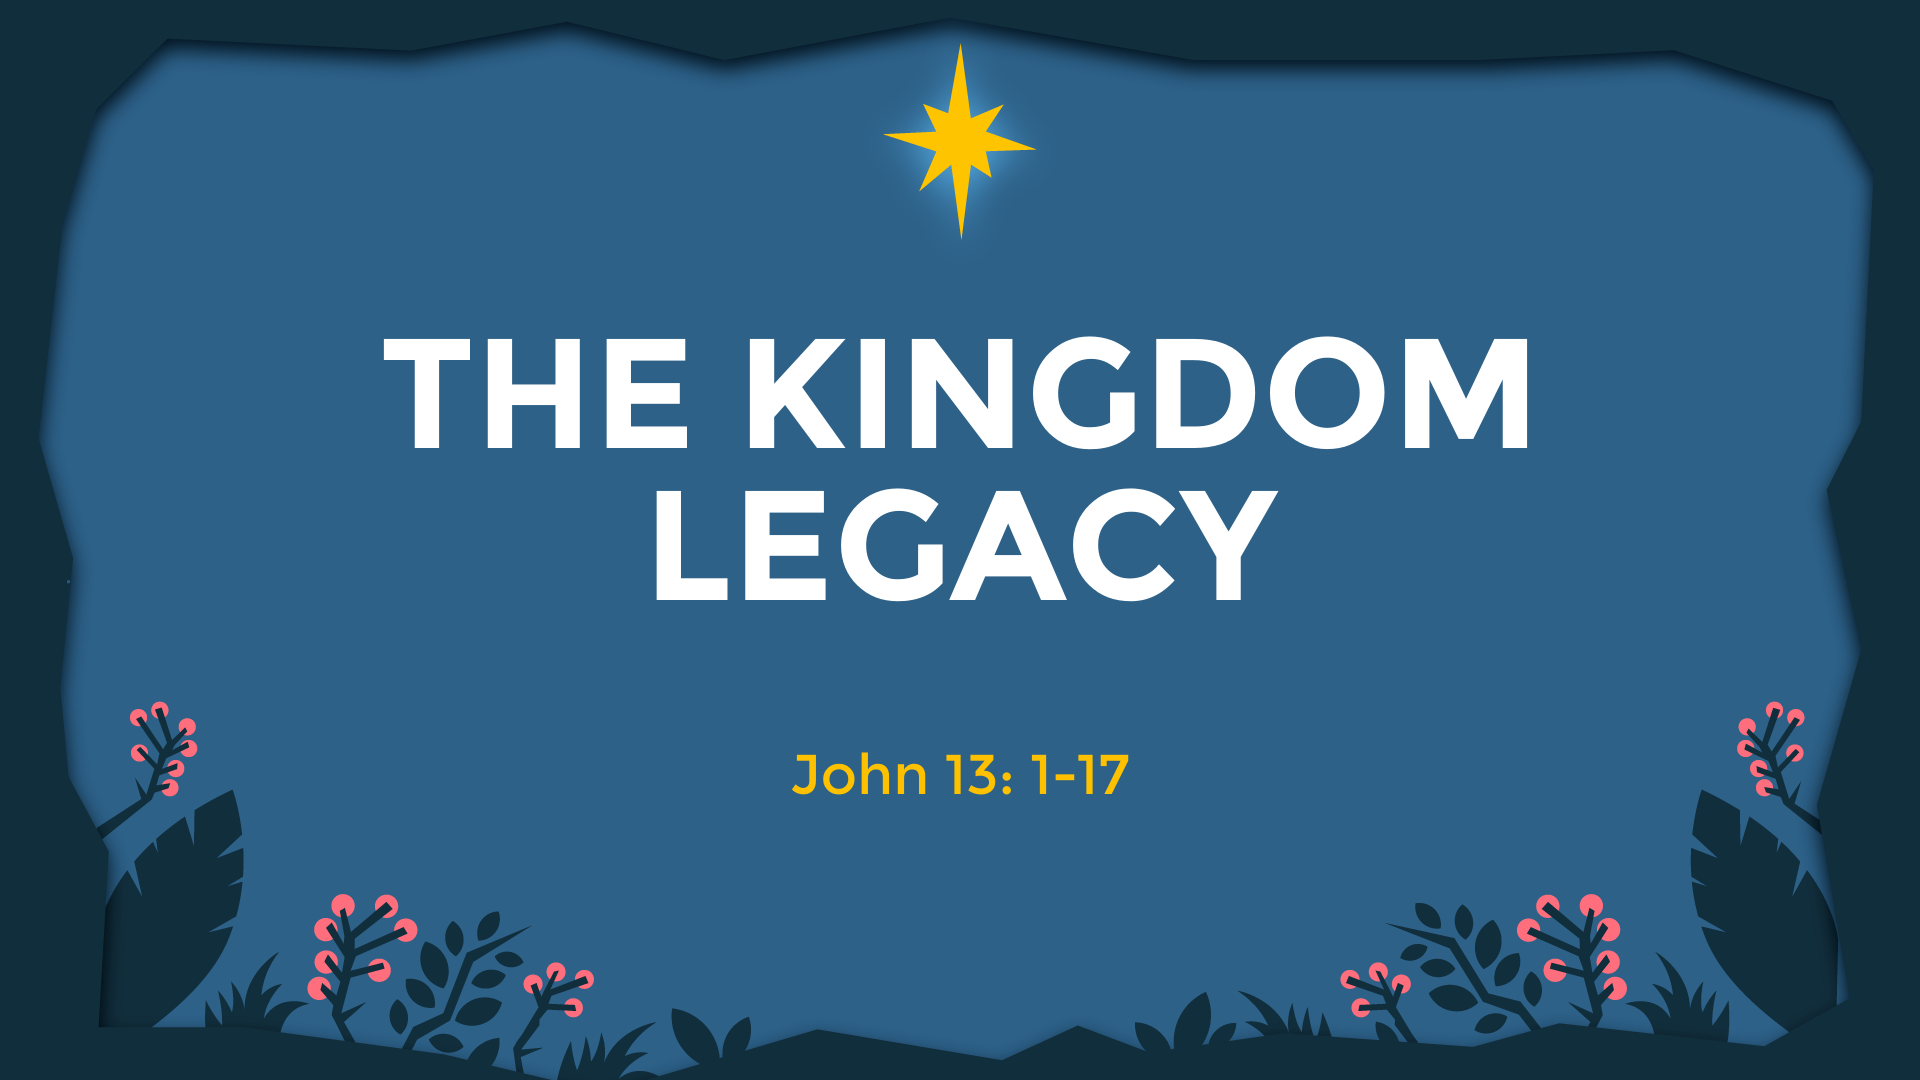 Dec 13, 2020 - The Kingdom Legacy (Video) - John 13: 1-17